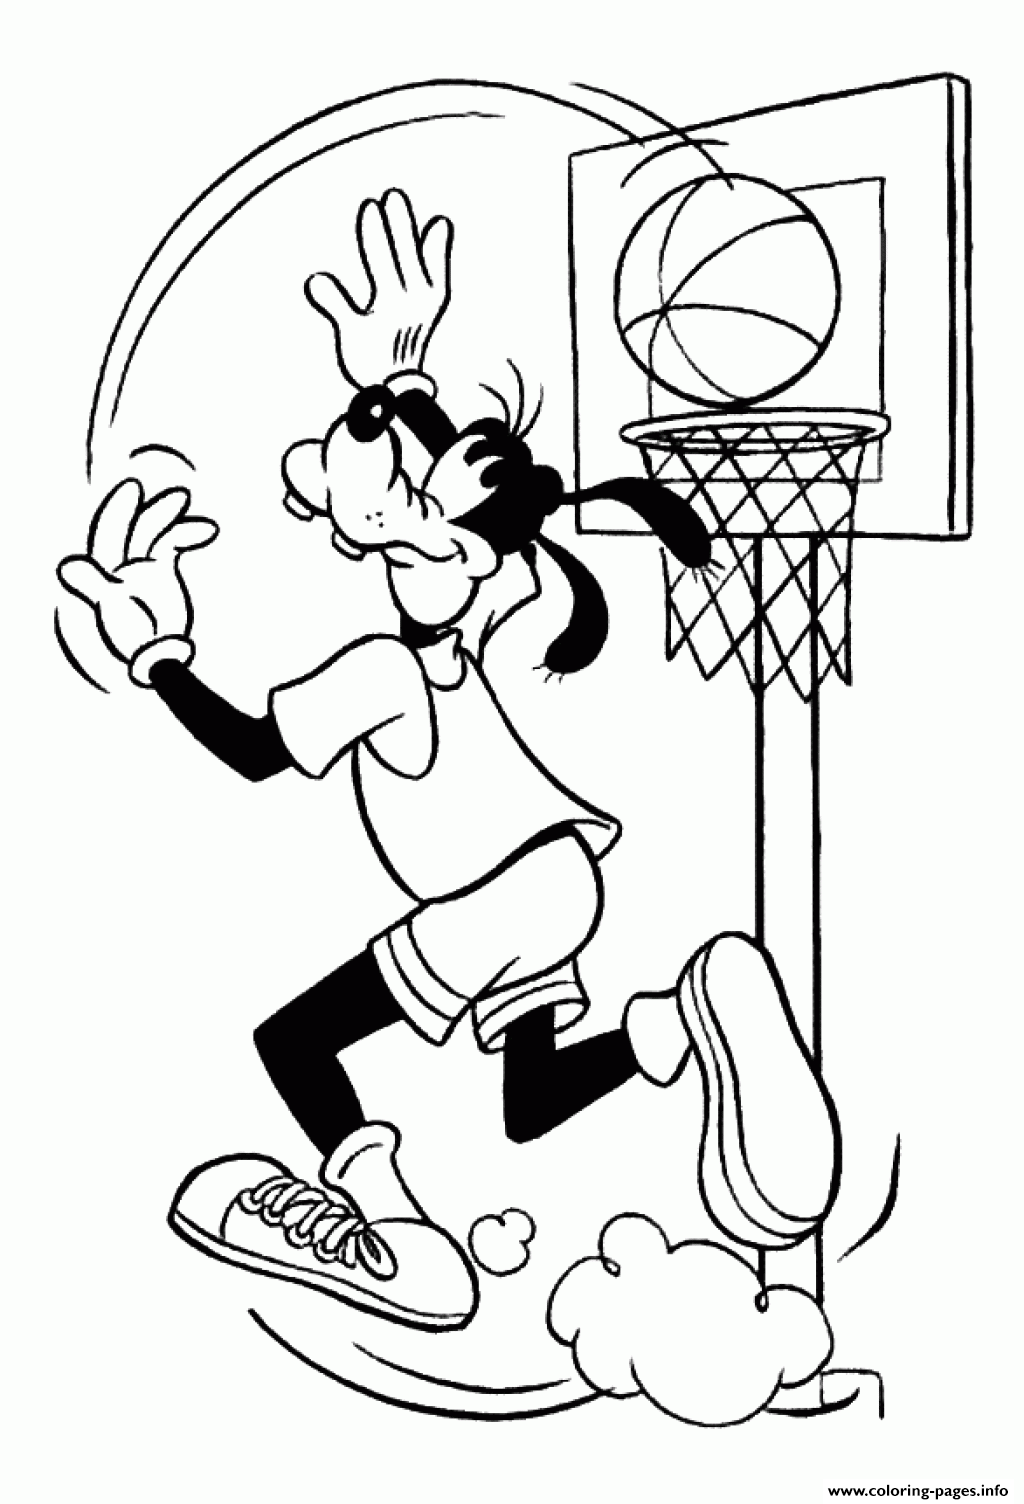 Disney Goofy Basketball E8b5 coloring